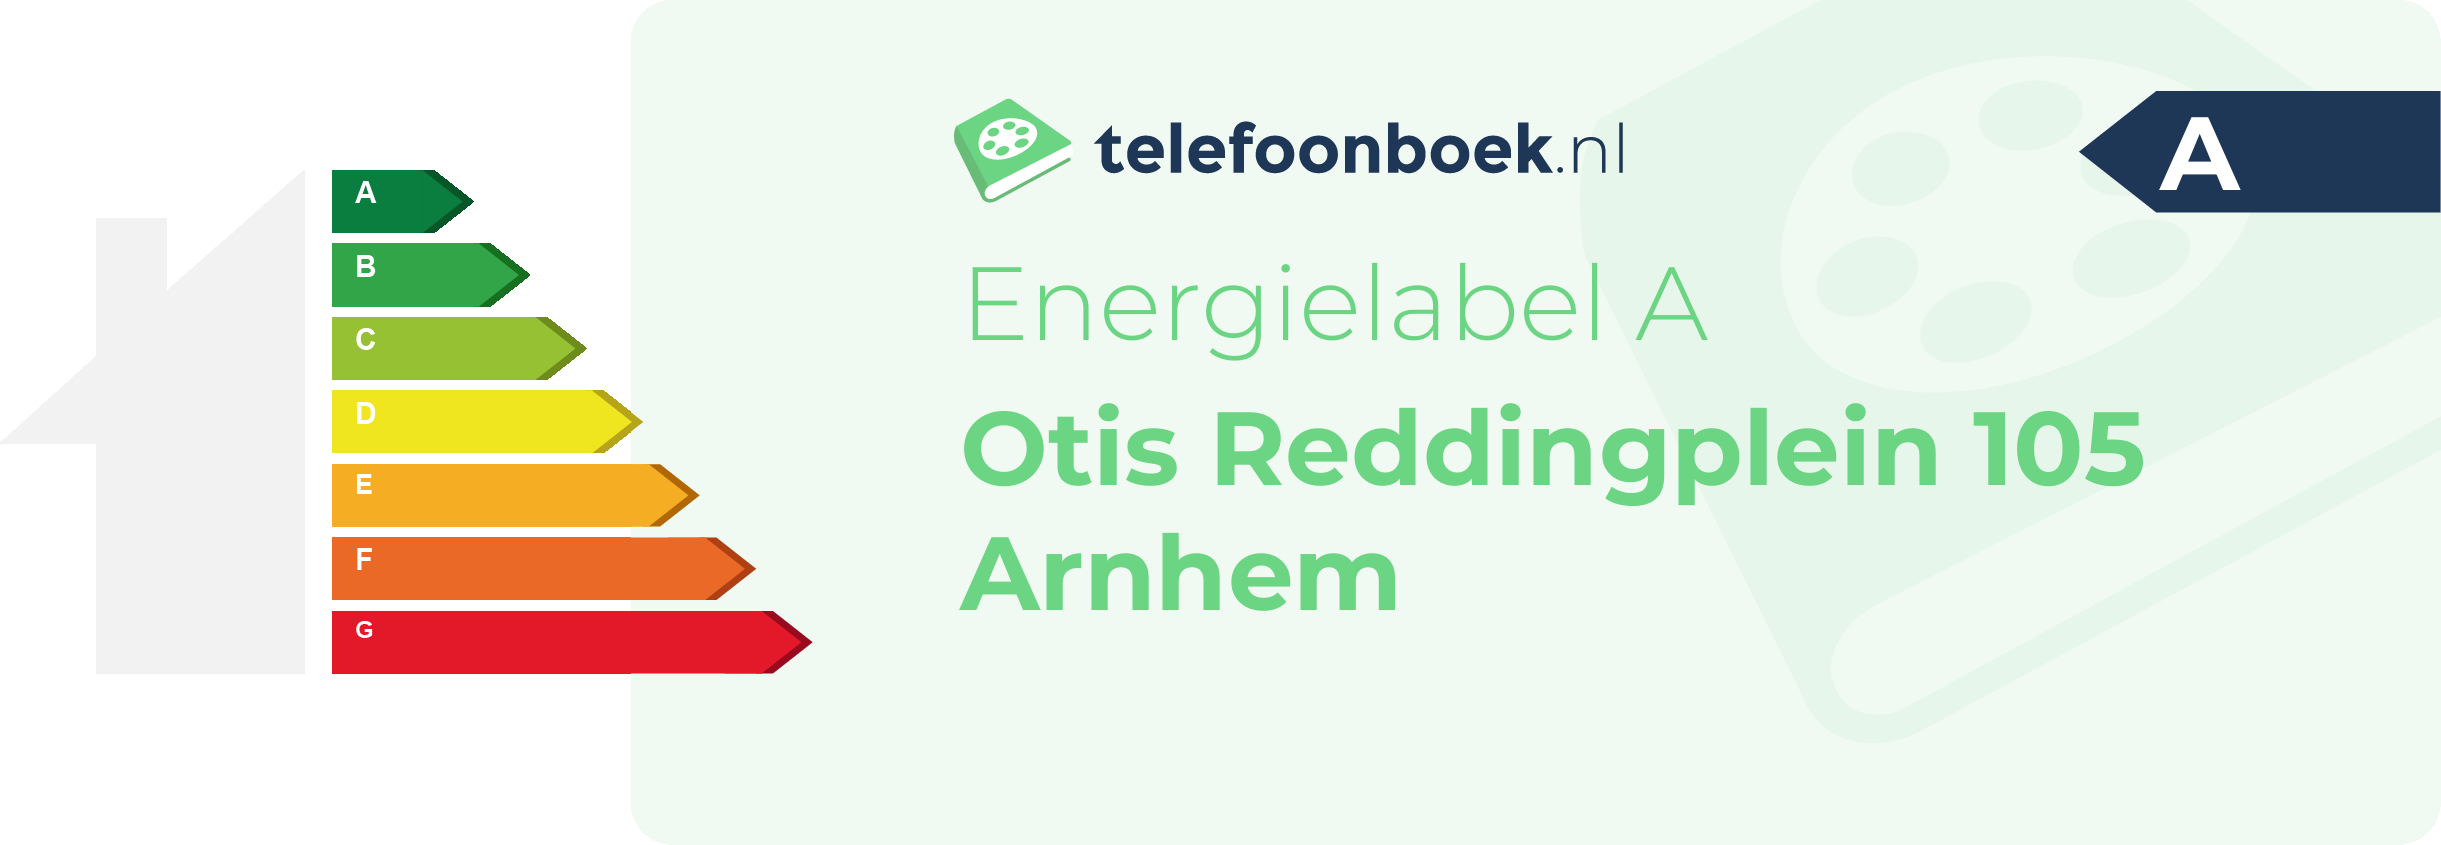 Energielabel Otis Reddingplein 105 Arnhem